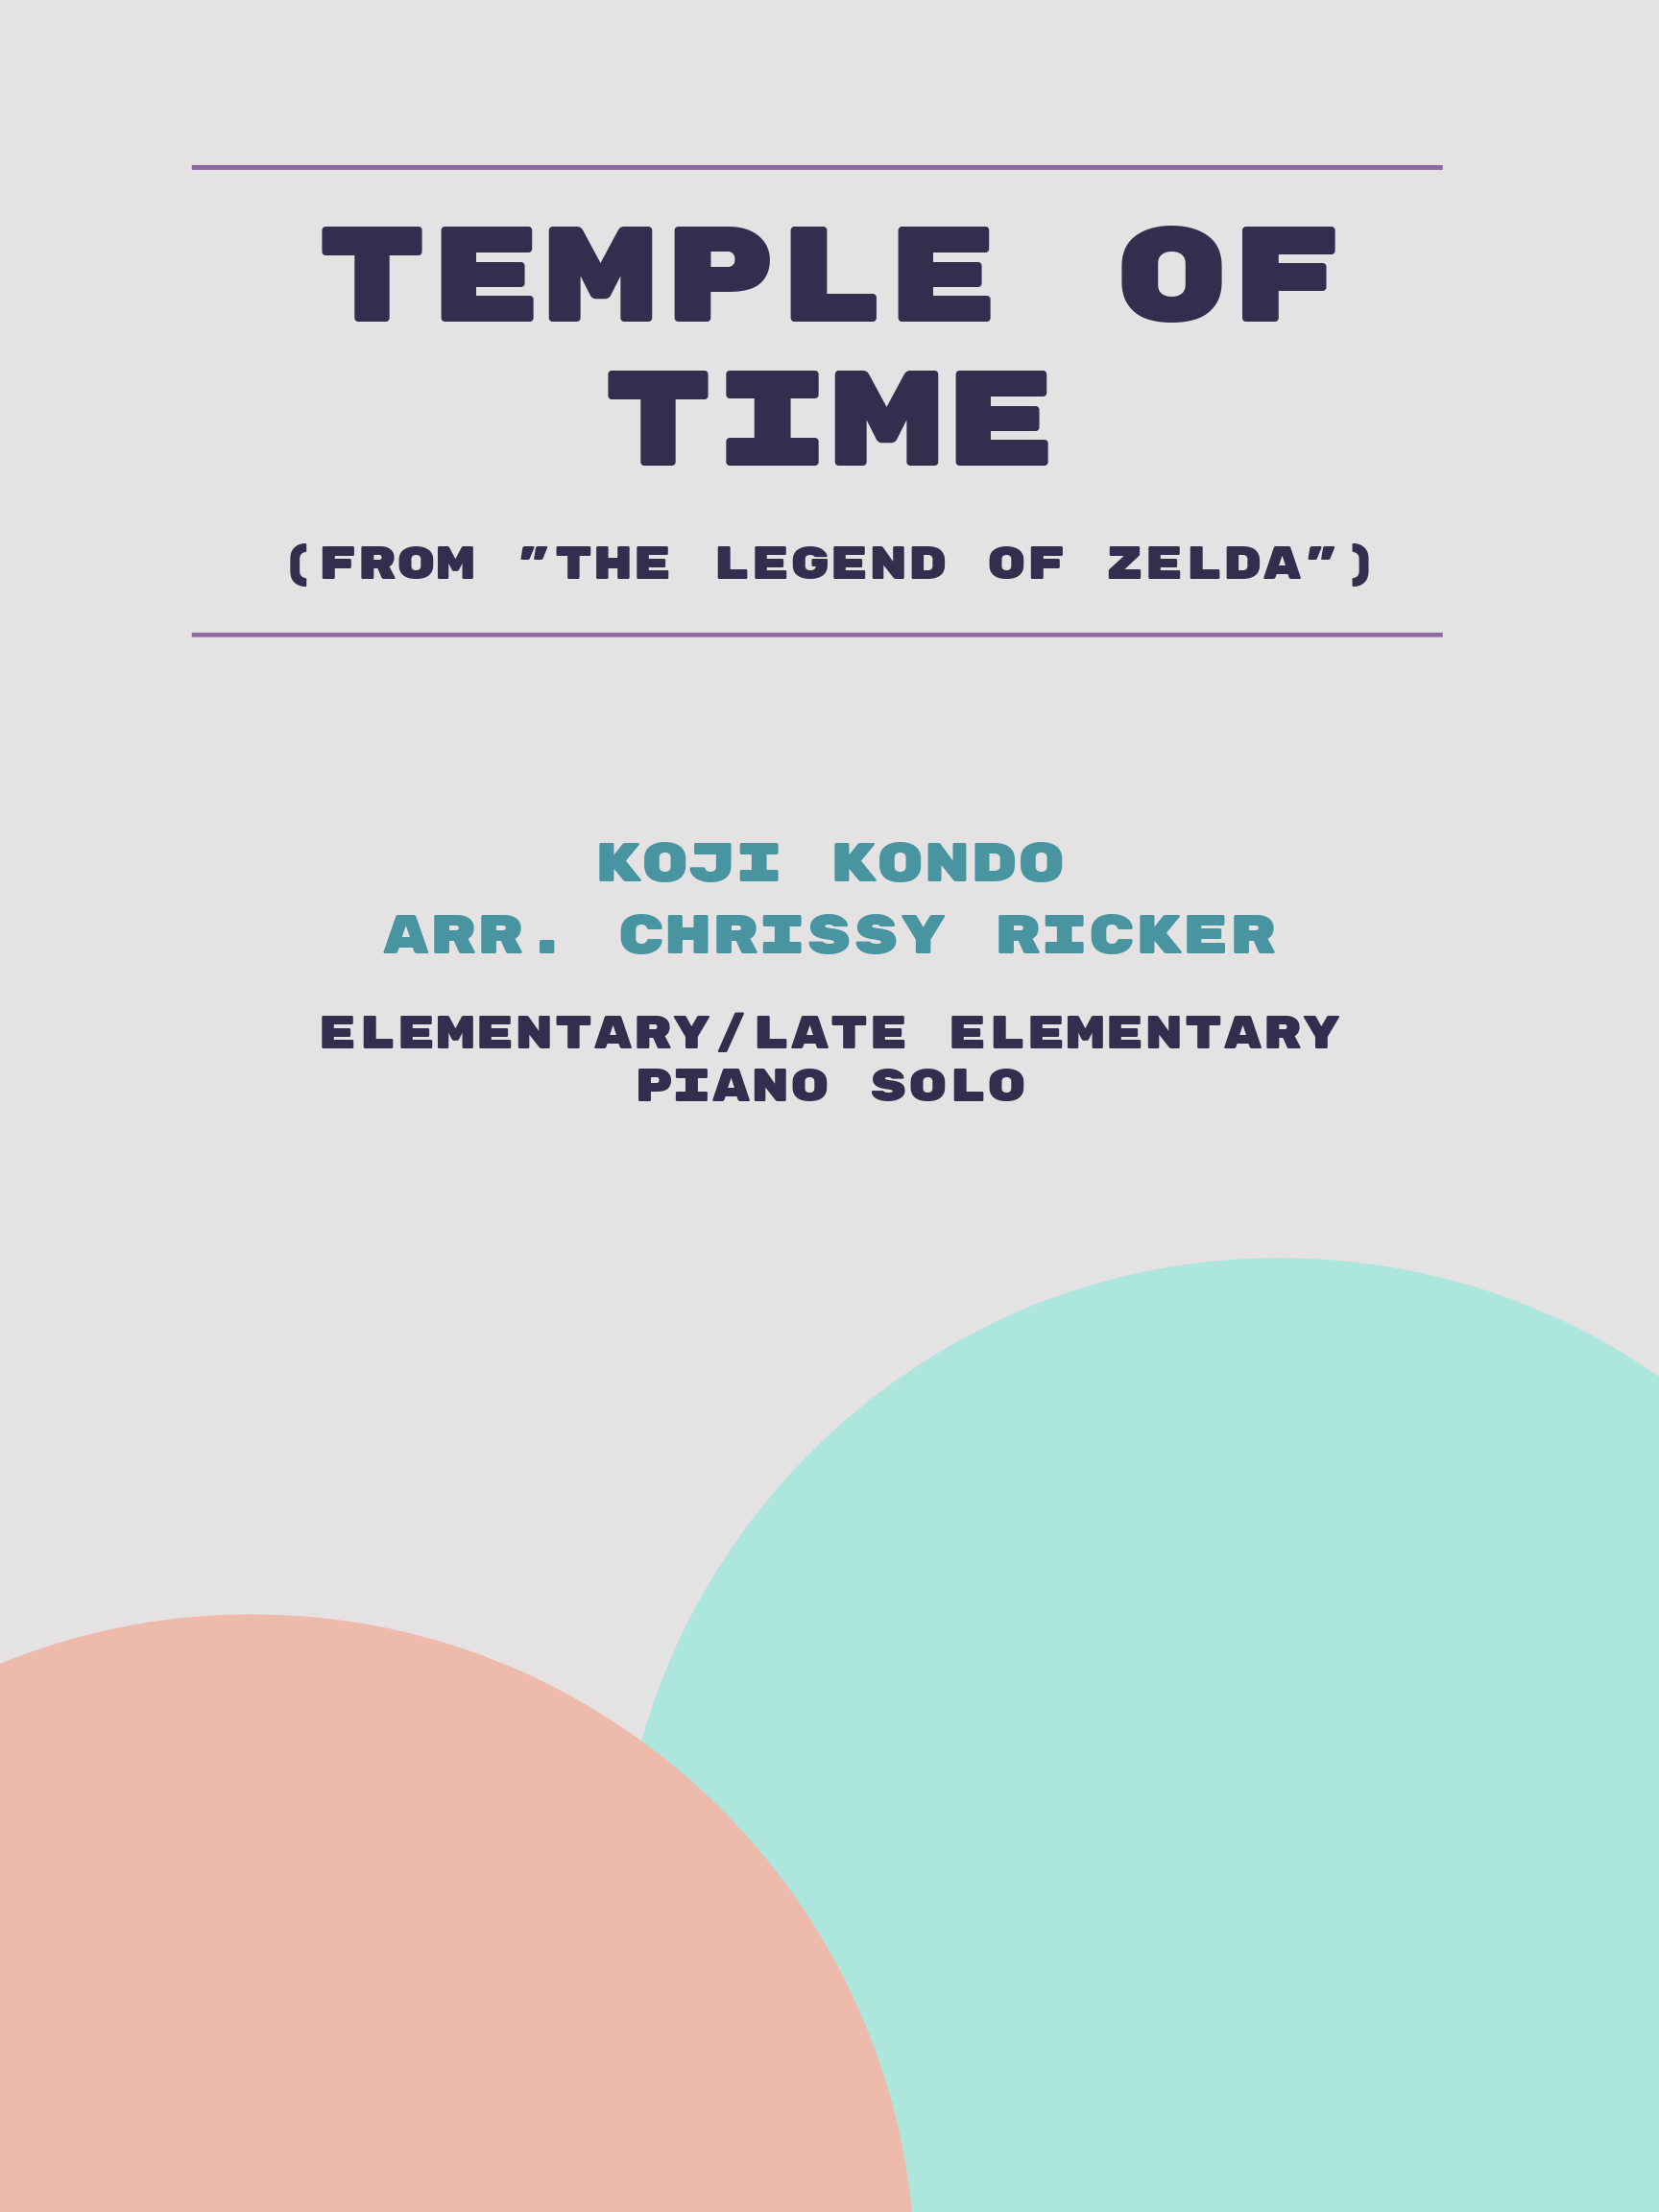 Temple of Time by Koji Kondo